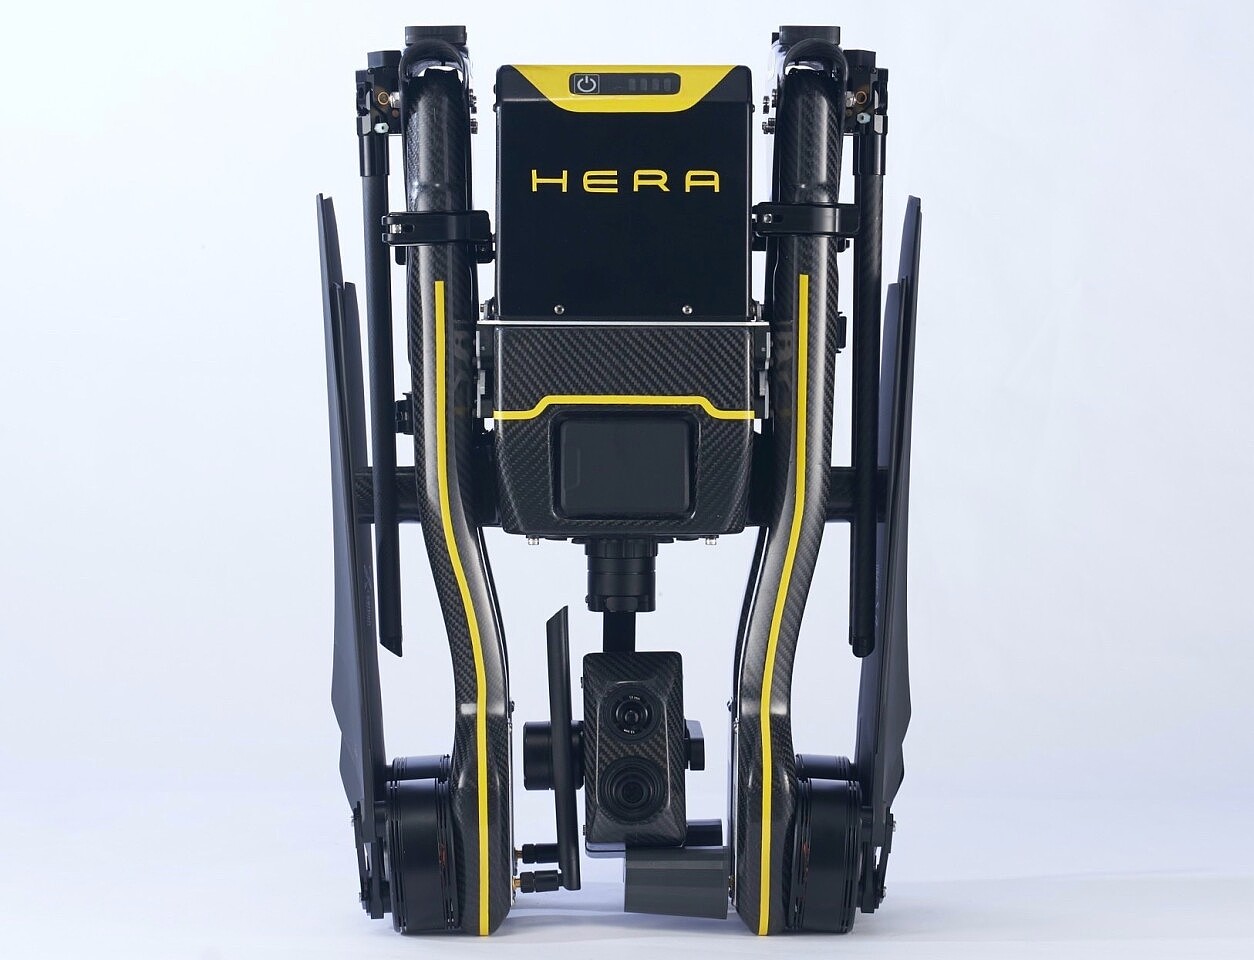 Hera无人机可举起33磅货物并可装进背包里携带 - 3